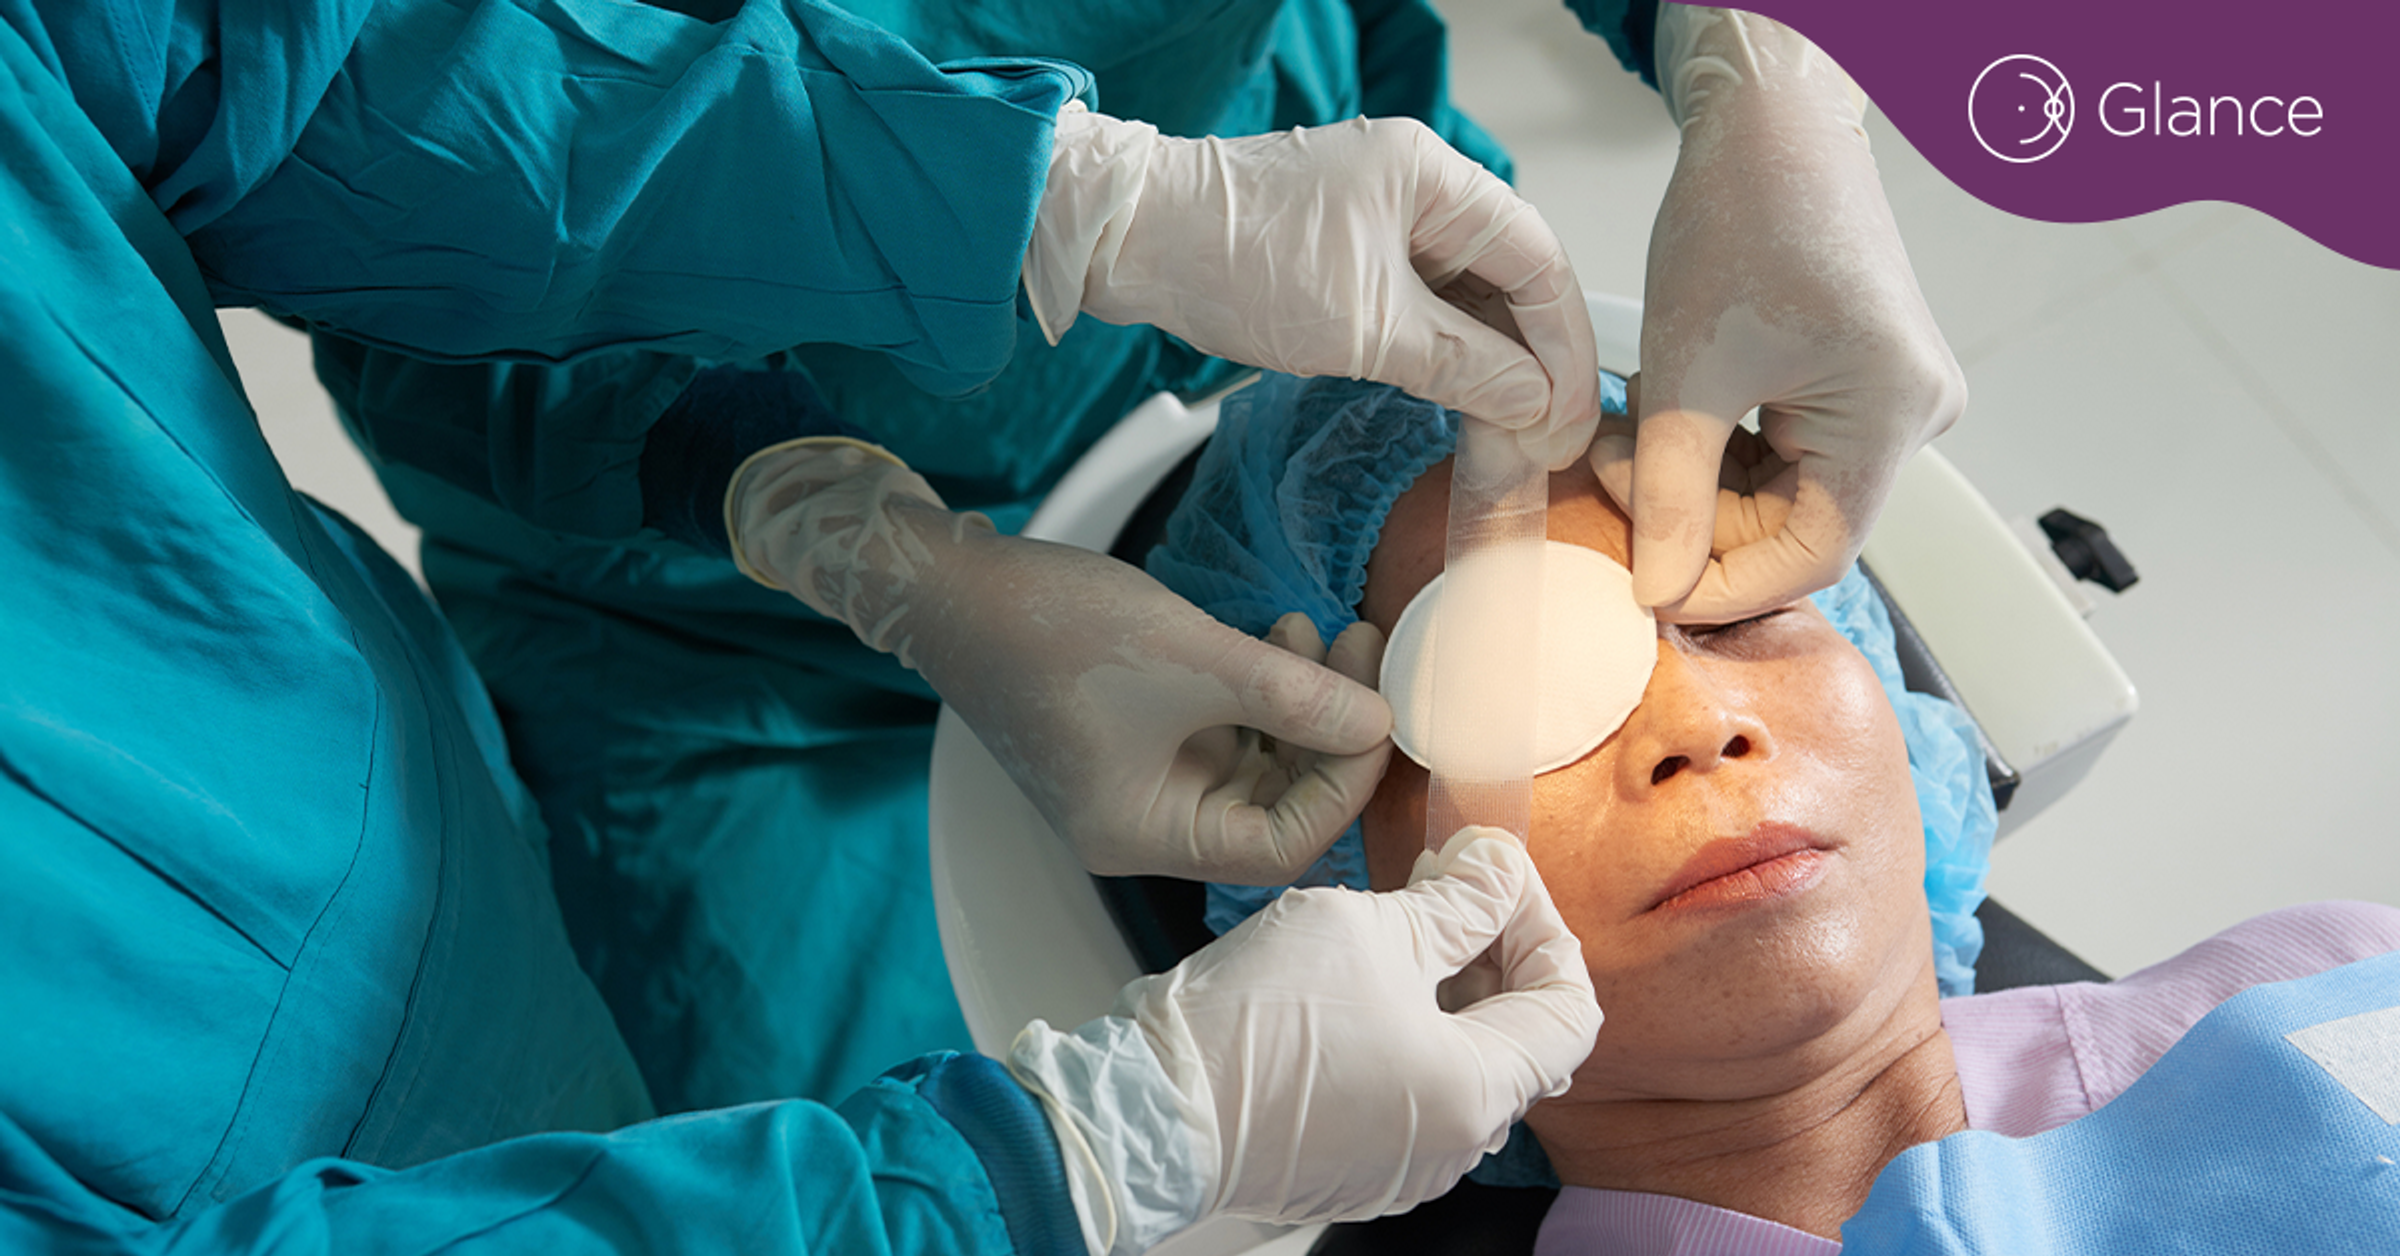 Contact lens bandage material promotes corneal healing